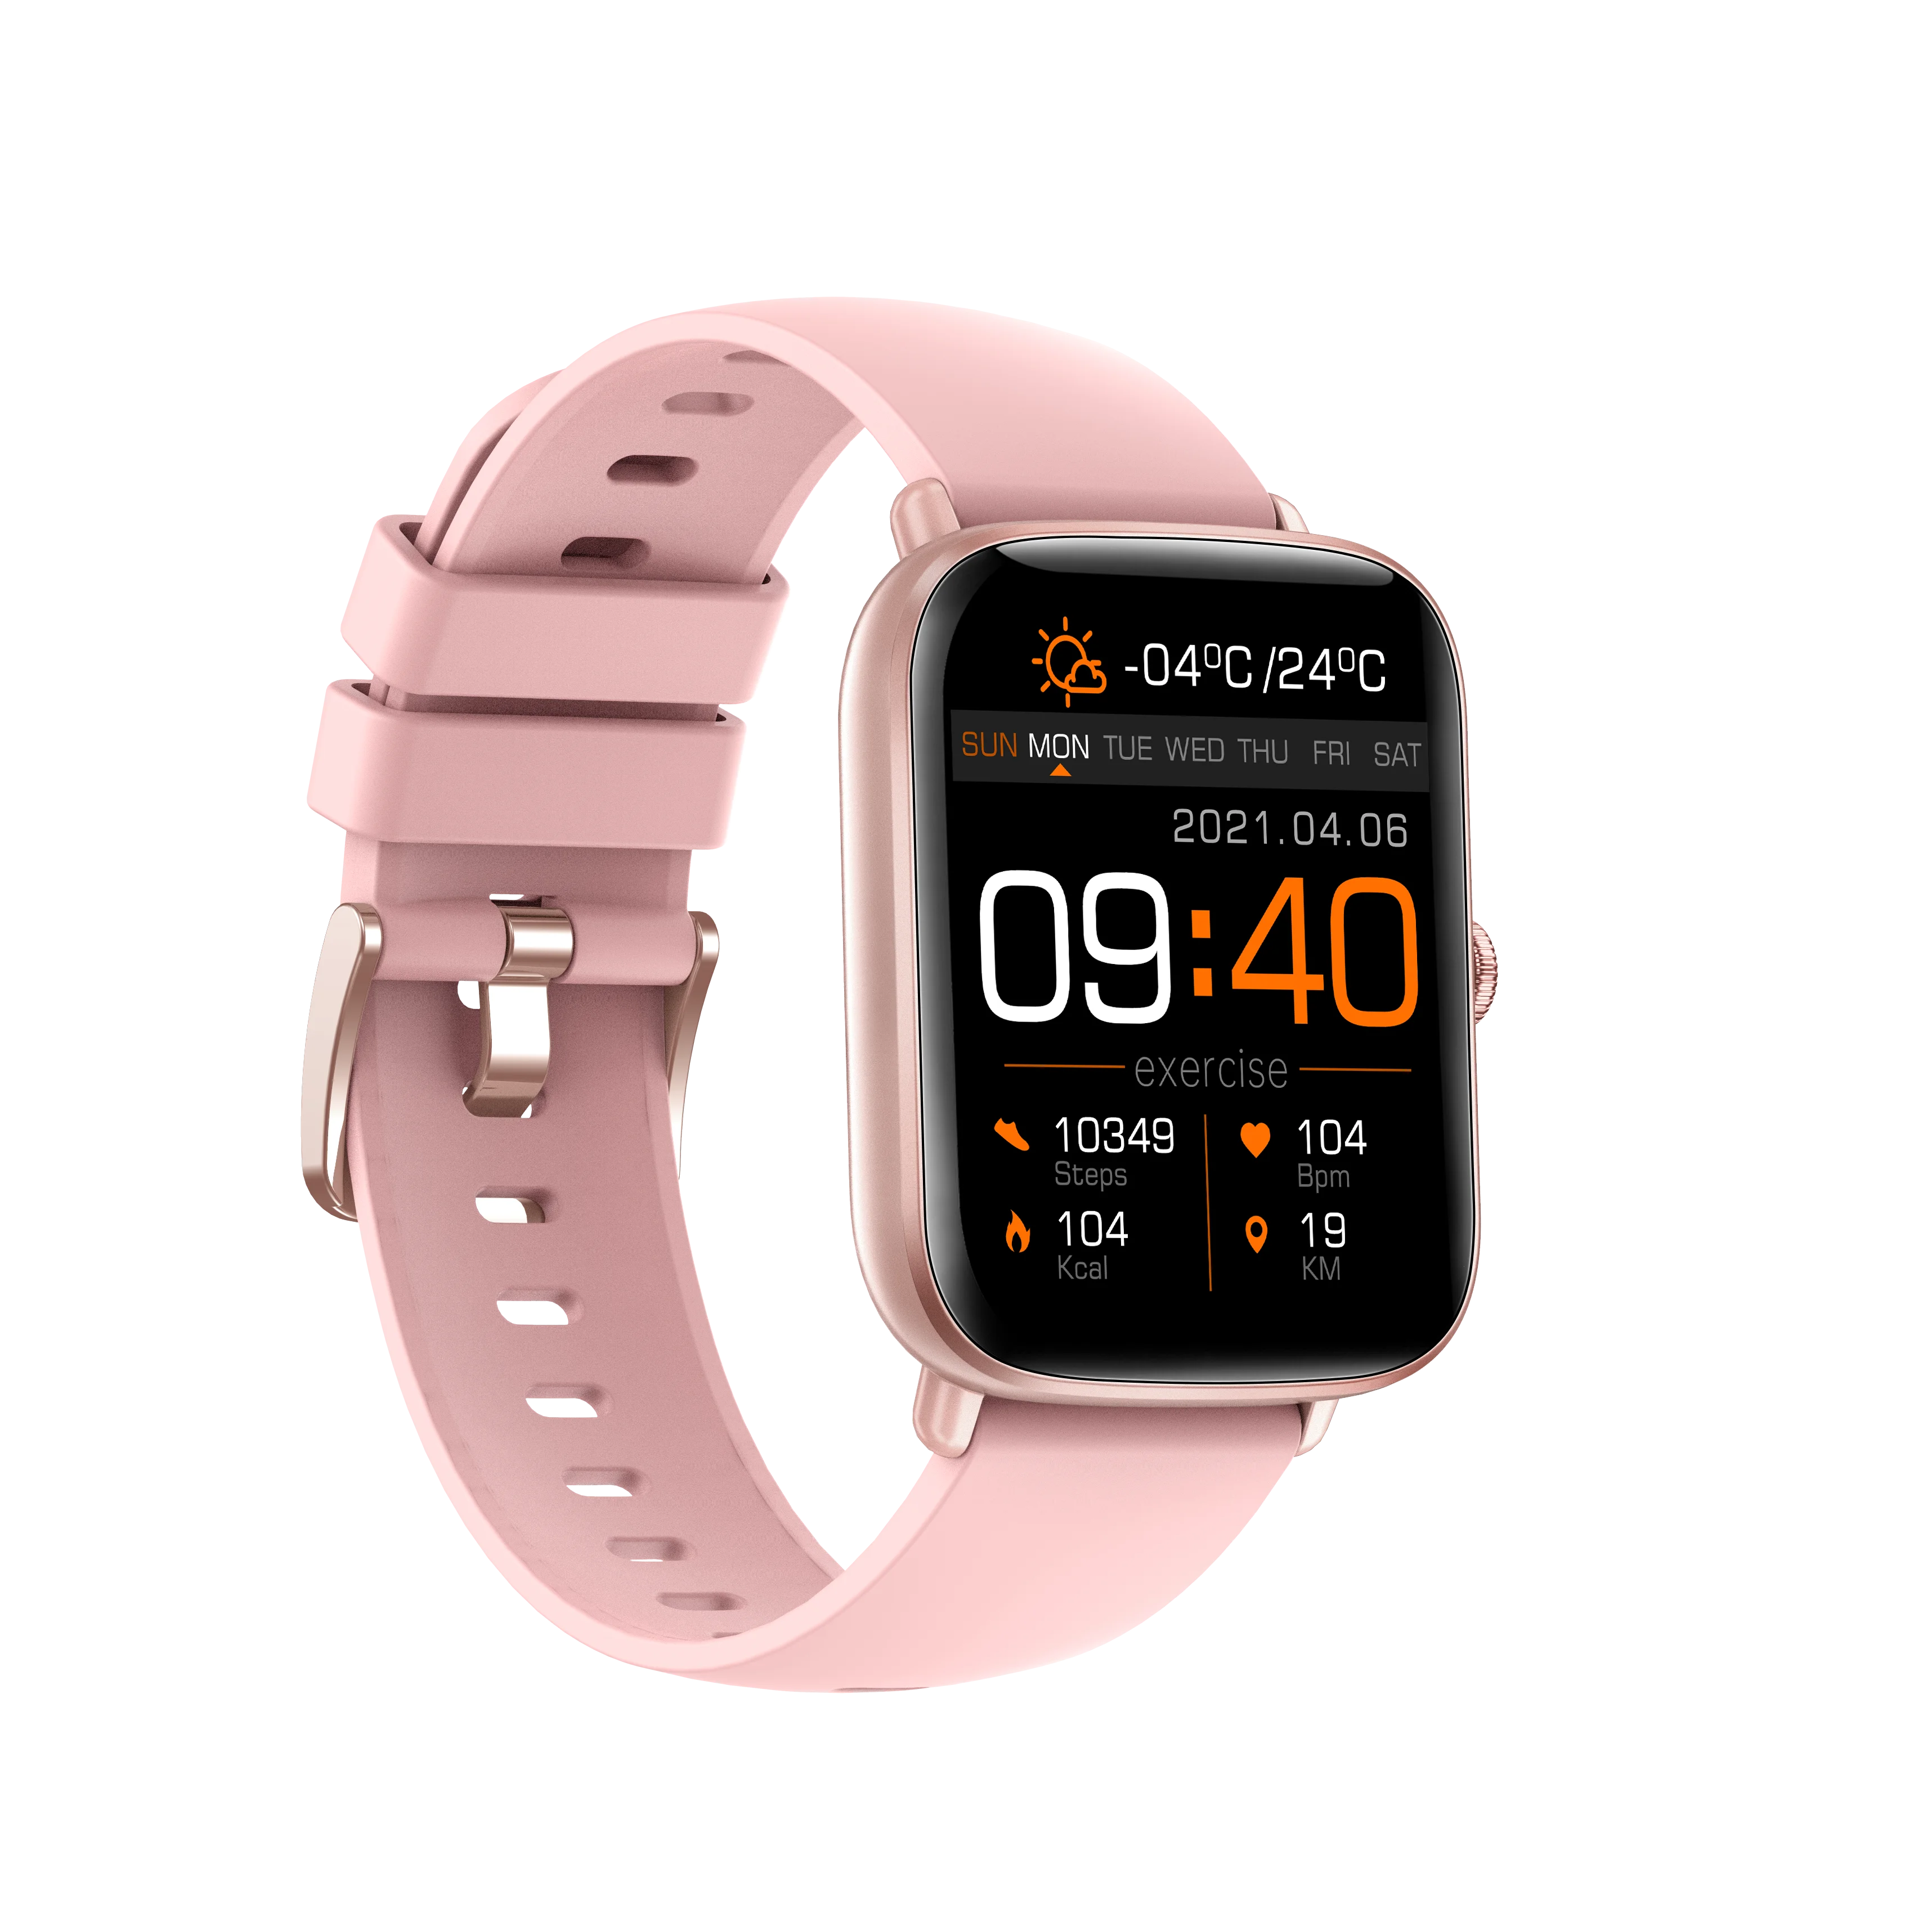 

Dibet 2022 Smart Watch Ce Rohs Relojes Sport Smartwatch Sw33 Waterproof Android Fitness Tracker